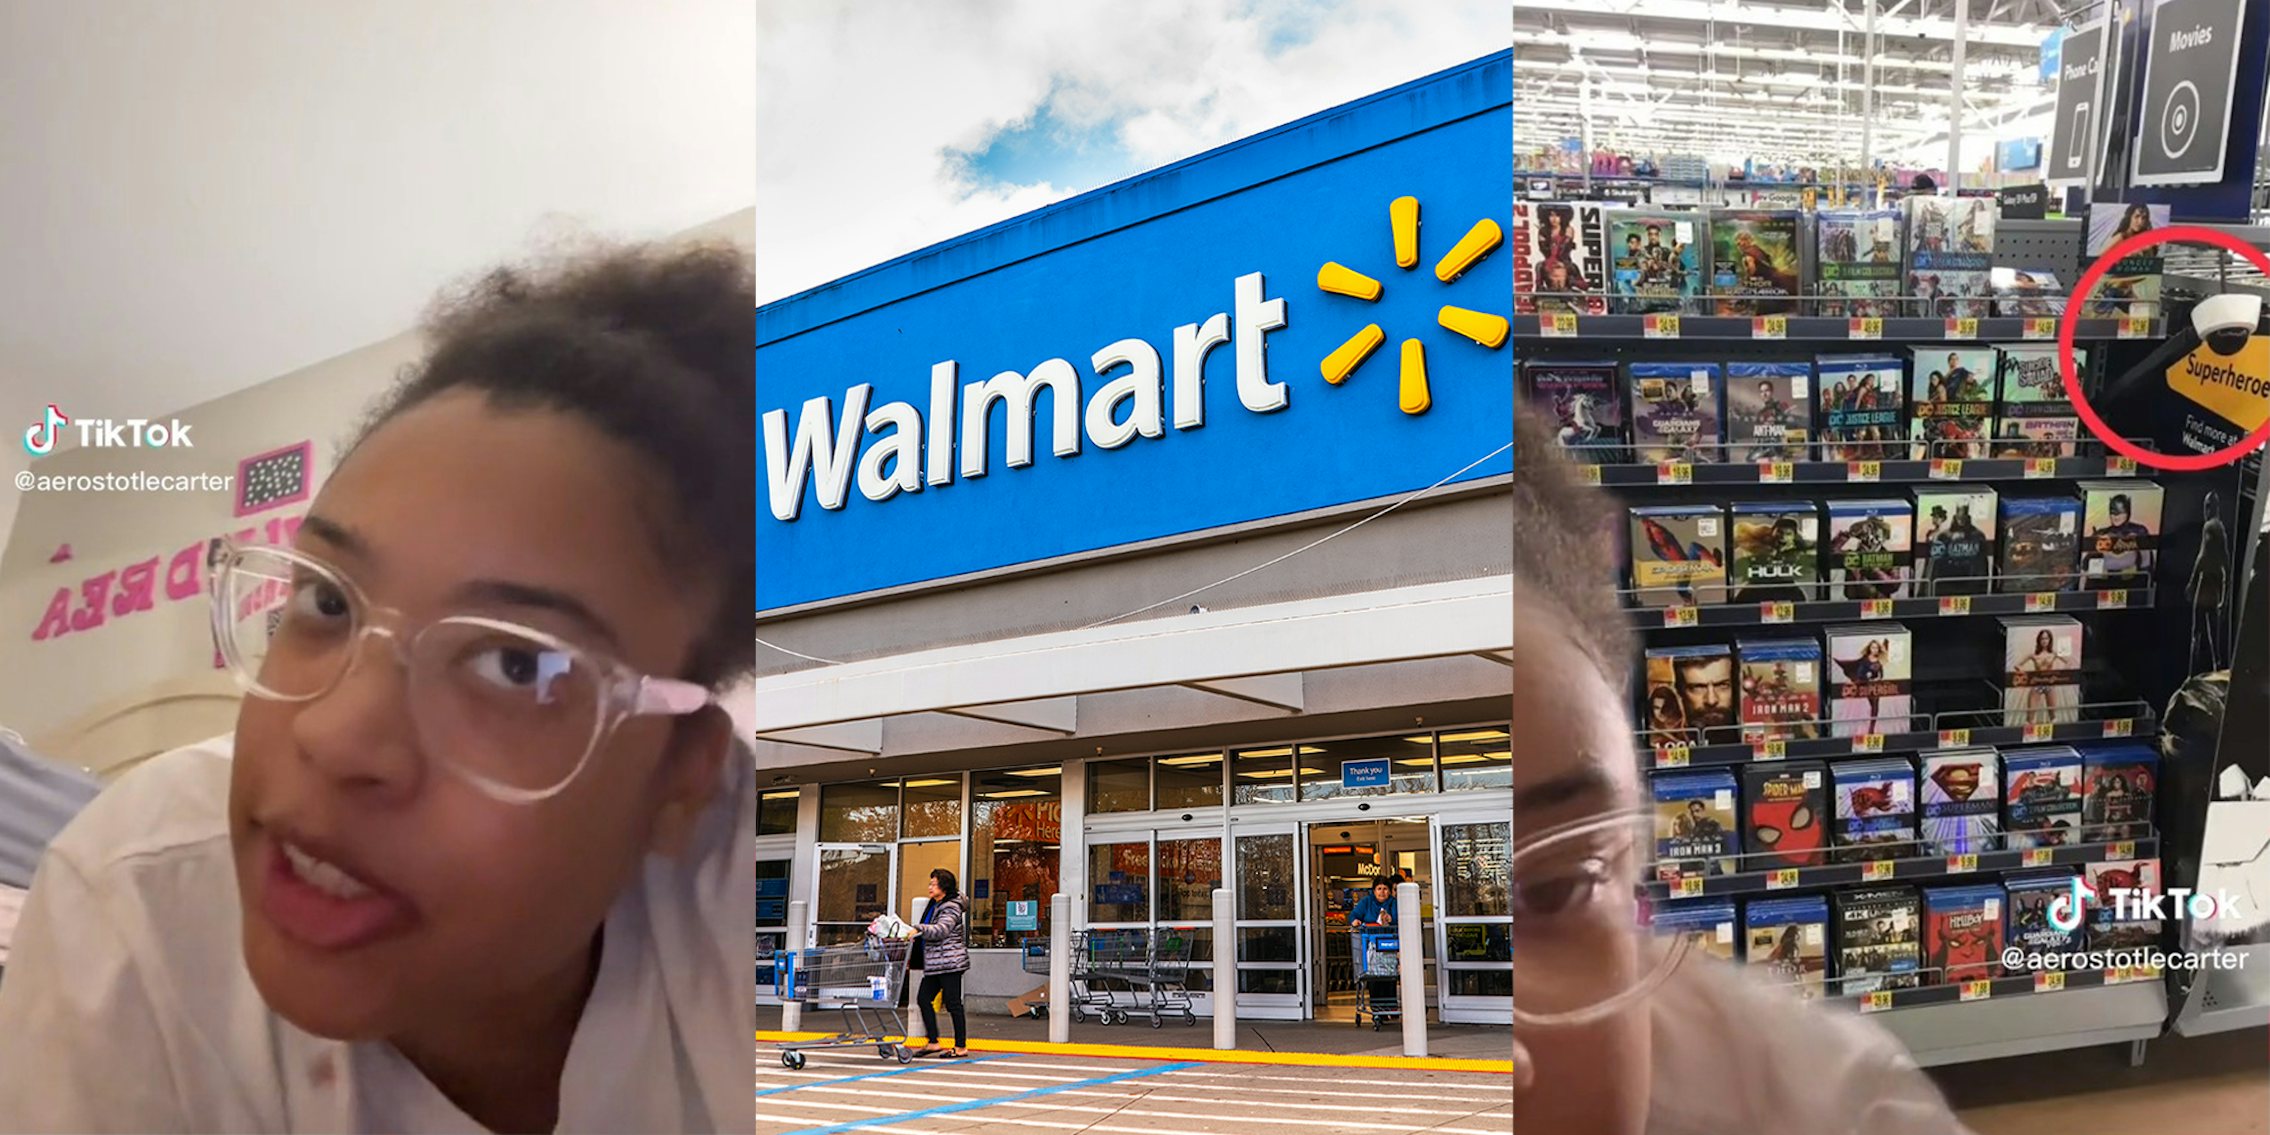 Woman Explains certain Cameras at Walmart don't work